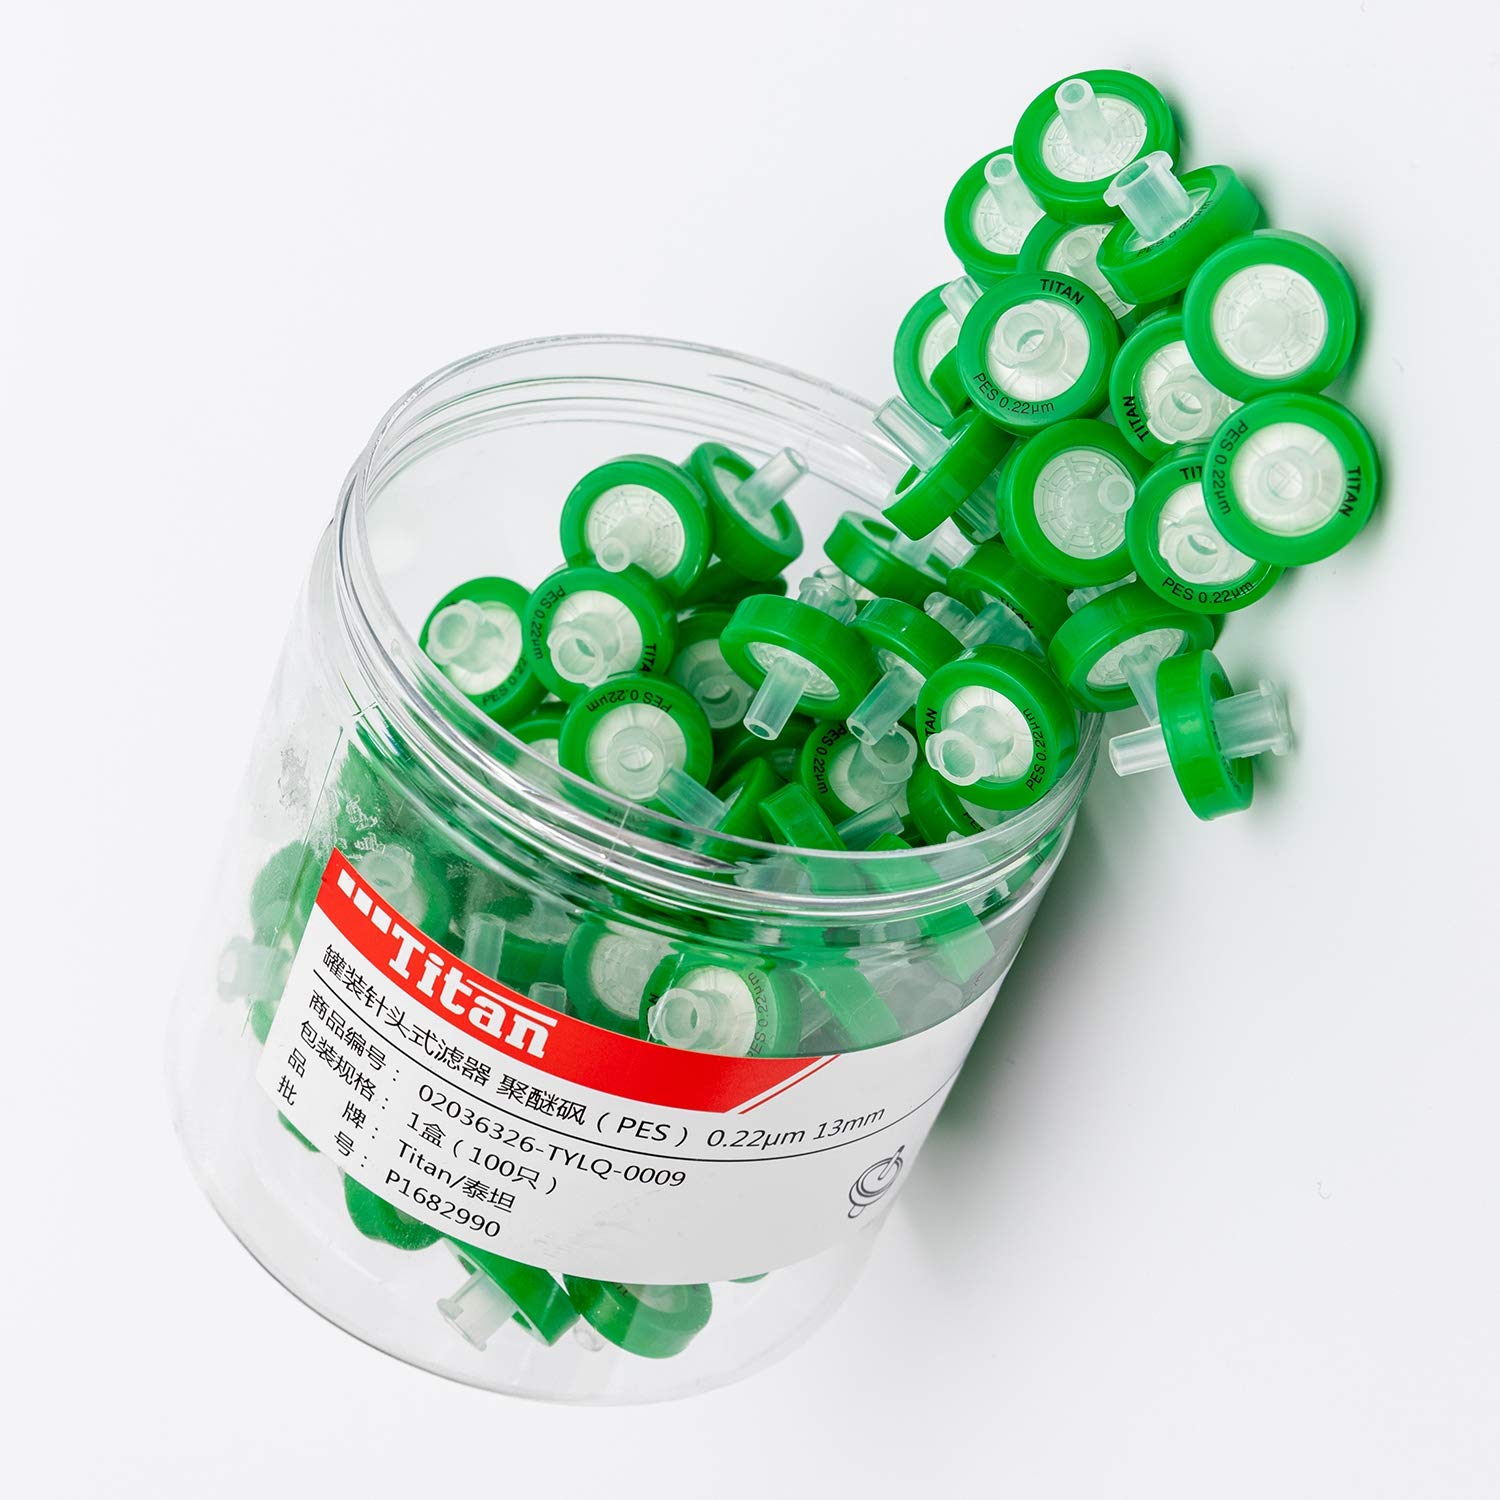 Wholesale Syringe Filter,Syringe Lab Filters, PES (Polyethersulfone) 13mm Diameter 0.45μm Pore Size,Non Sterile Filtration,Green